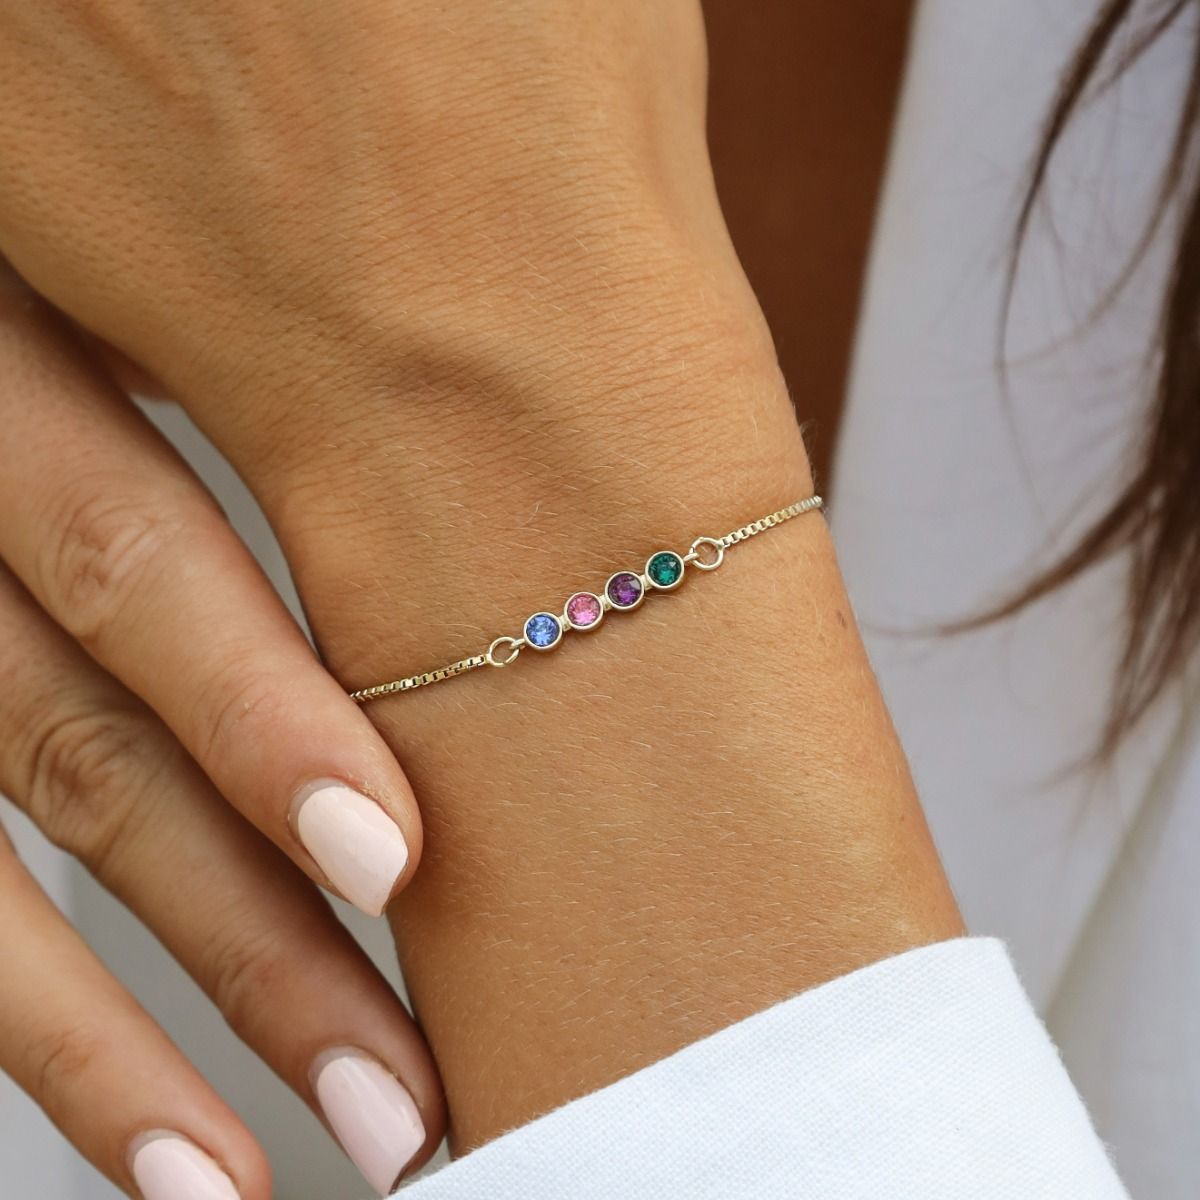 Buy Gold Birthstone Bracelet Personalized Crystal Bracelet Online in India   Etsy